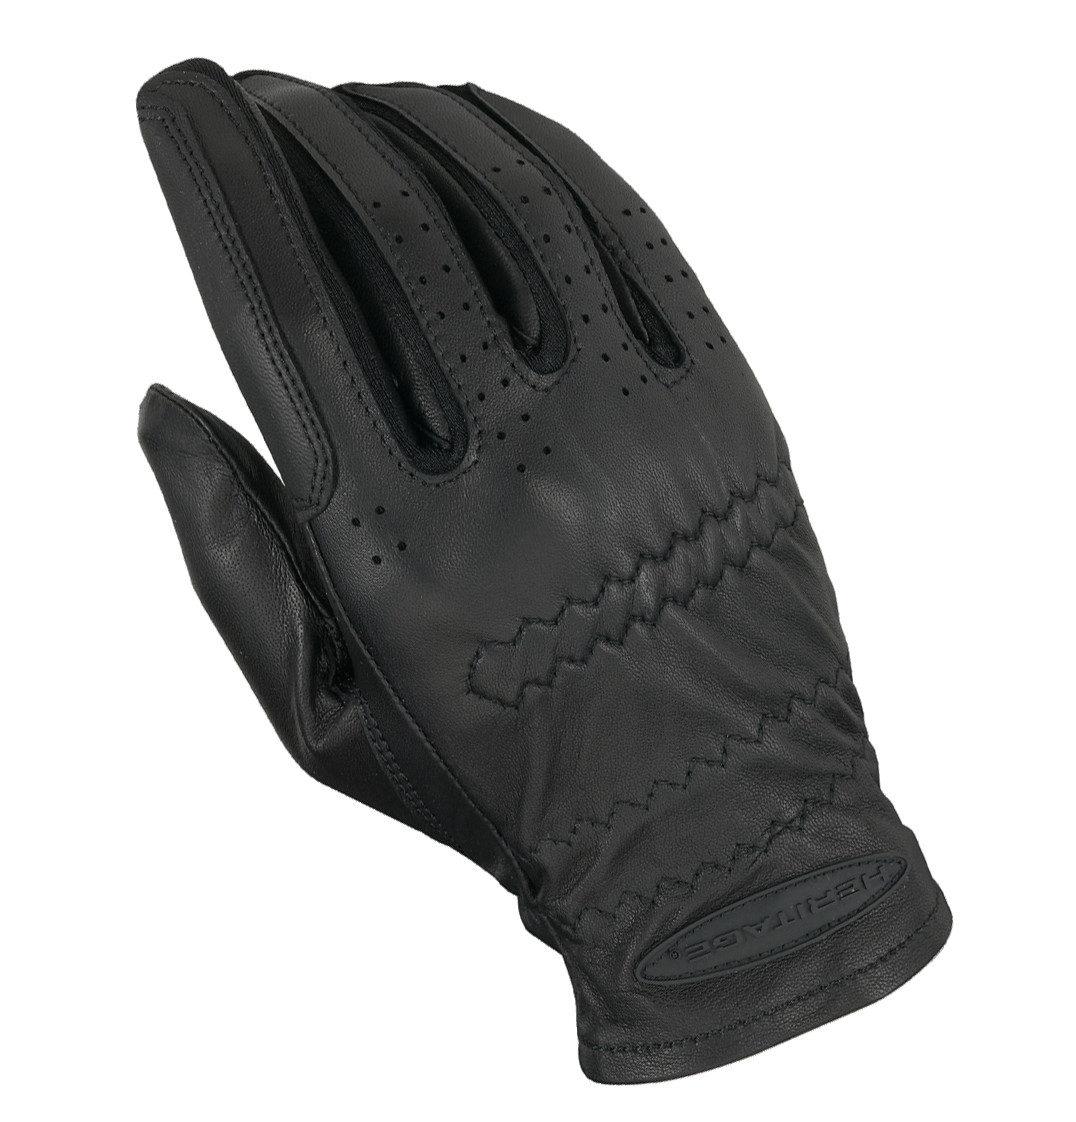 NWT PRO RIDERS PRI Kids Black Leather Horse Riding Show Gloves Size 4.5 